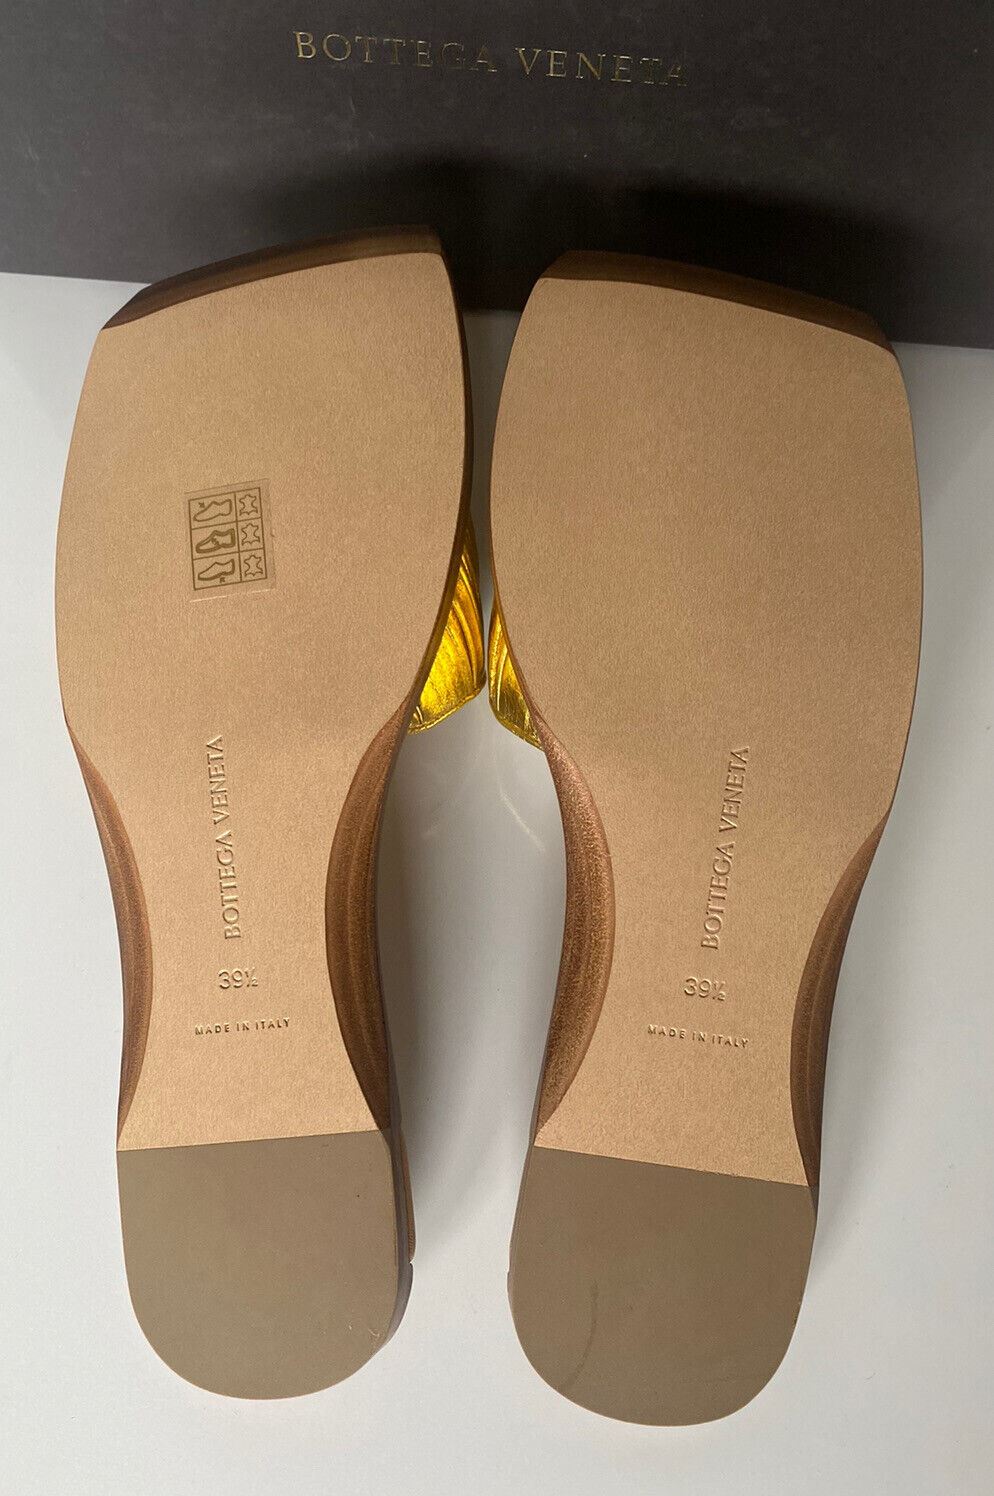 NIB $620 Bottega Veneta Women's Slip-on Leather Gold Sandals 9.5 US 39.5 578409